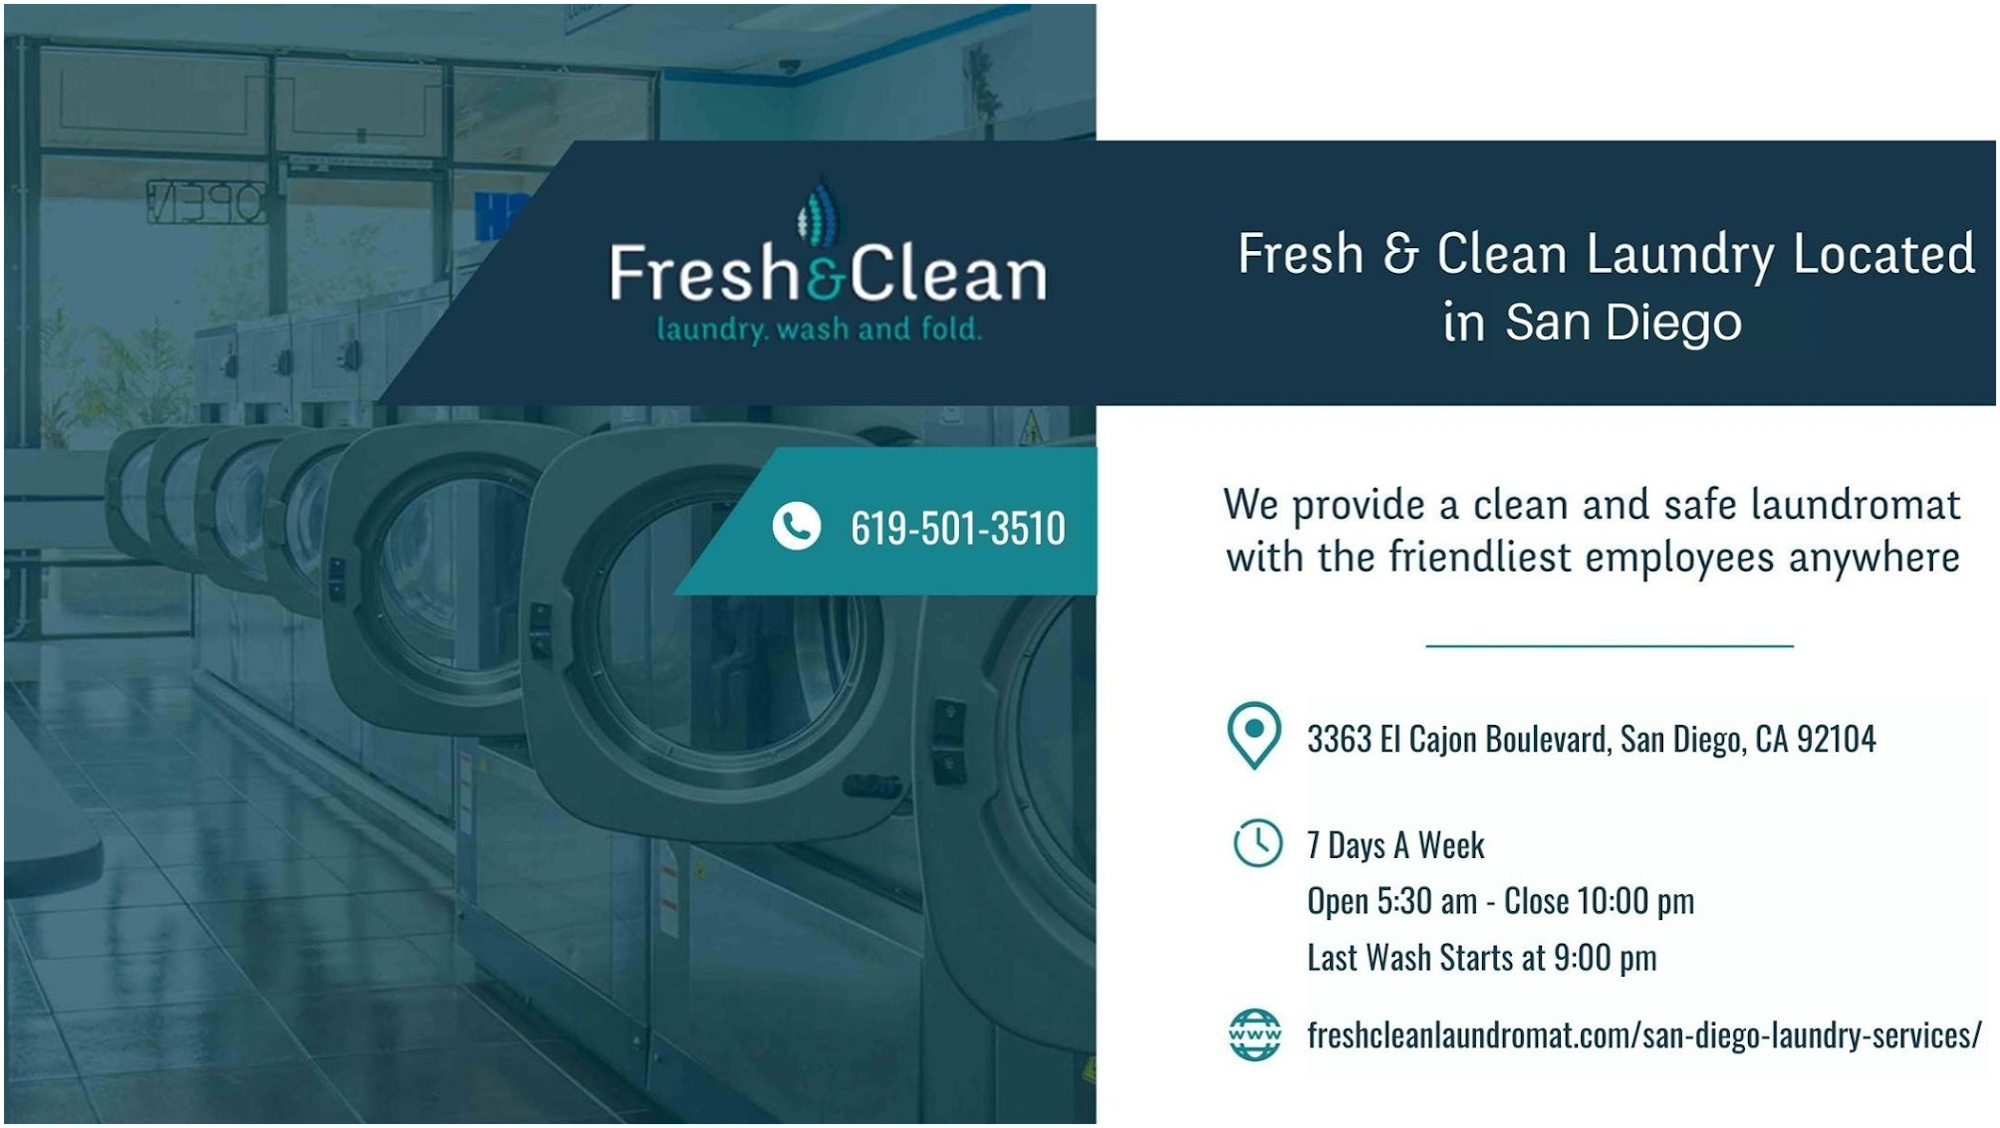 Fresh & Clean Laundry